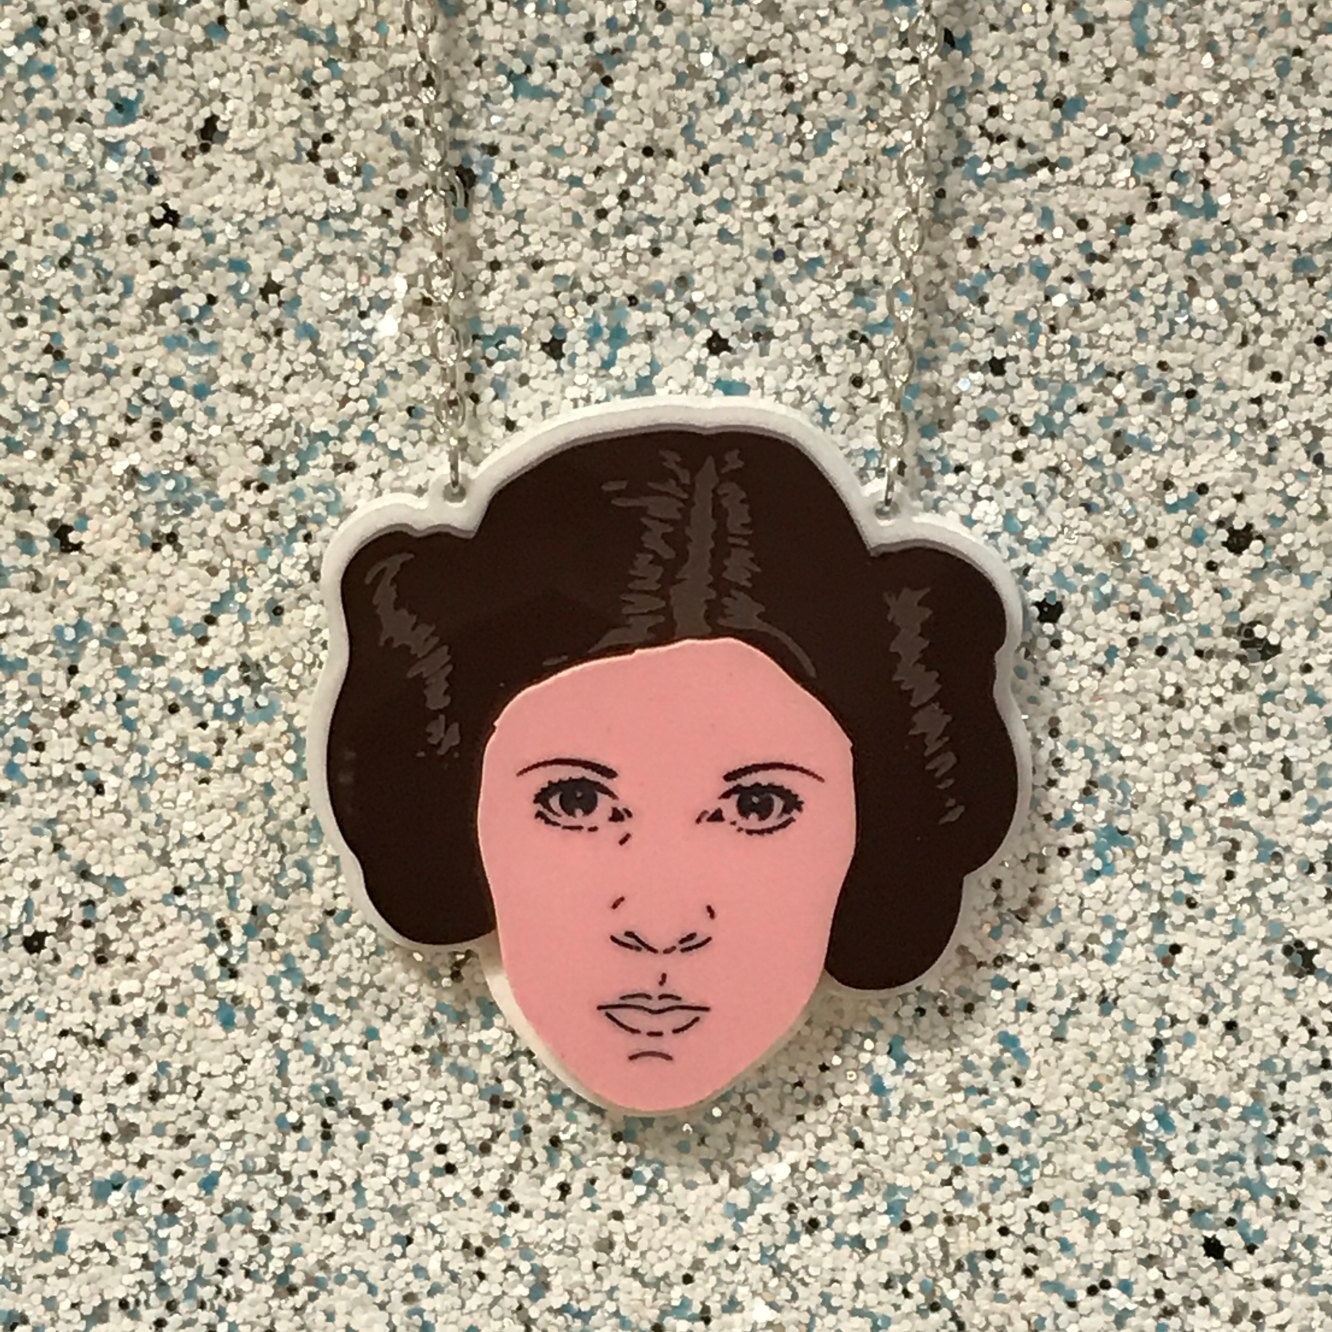 Star Wars Princess Leia Acrylic Necklace by Acrylic Asylum on Etsy